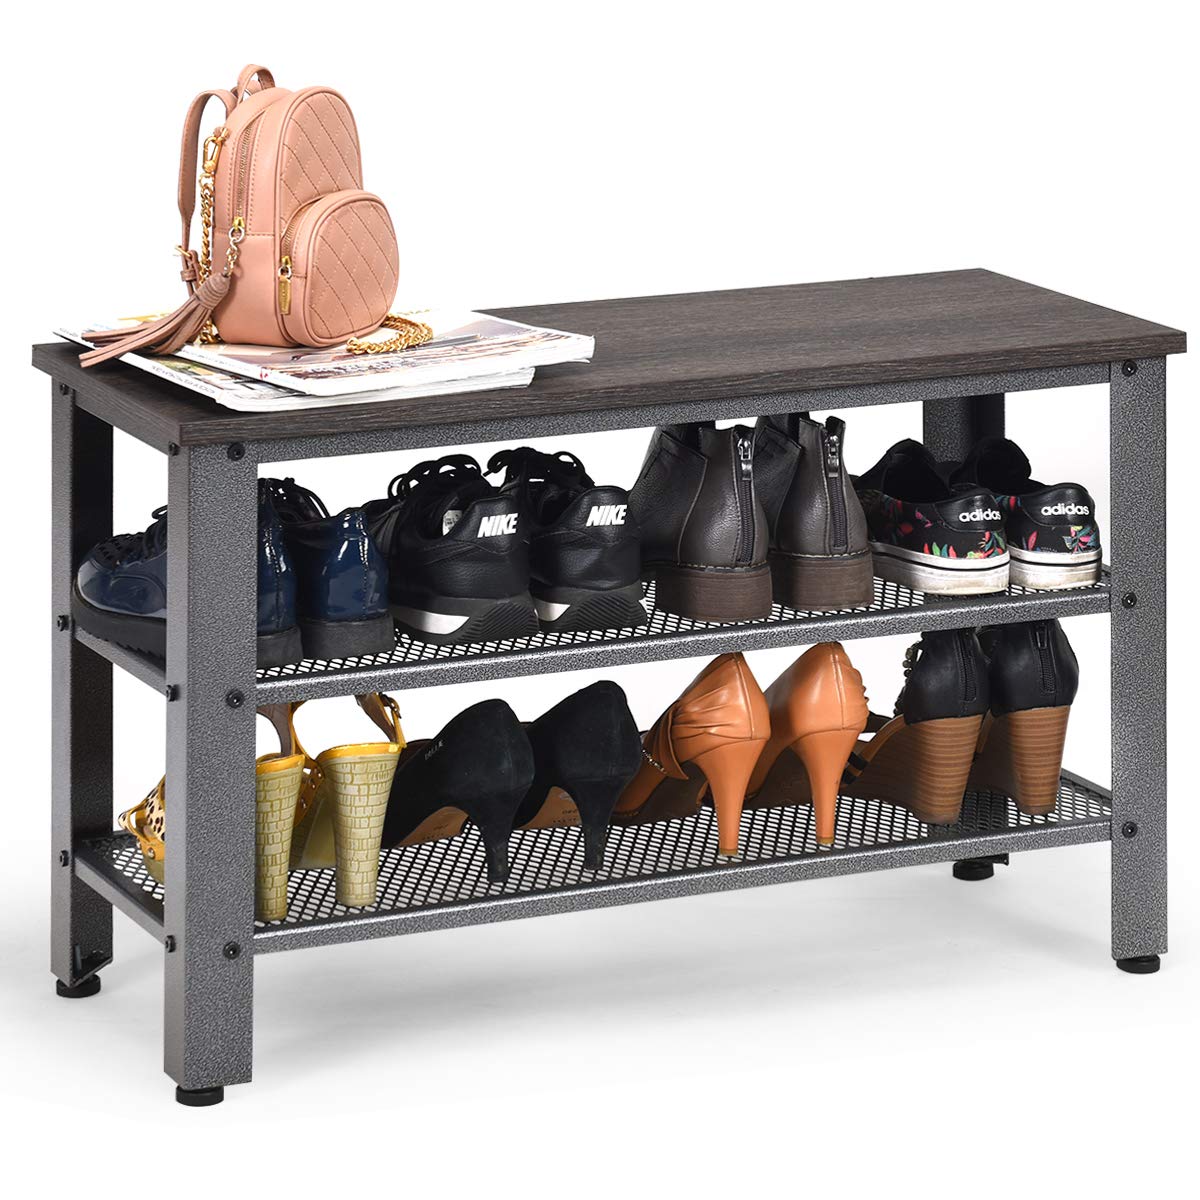 Giantex 3-Tier Shoe Bench, Industrial Shoe Rack with 2 Mesh Storage Shelves (Gray)